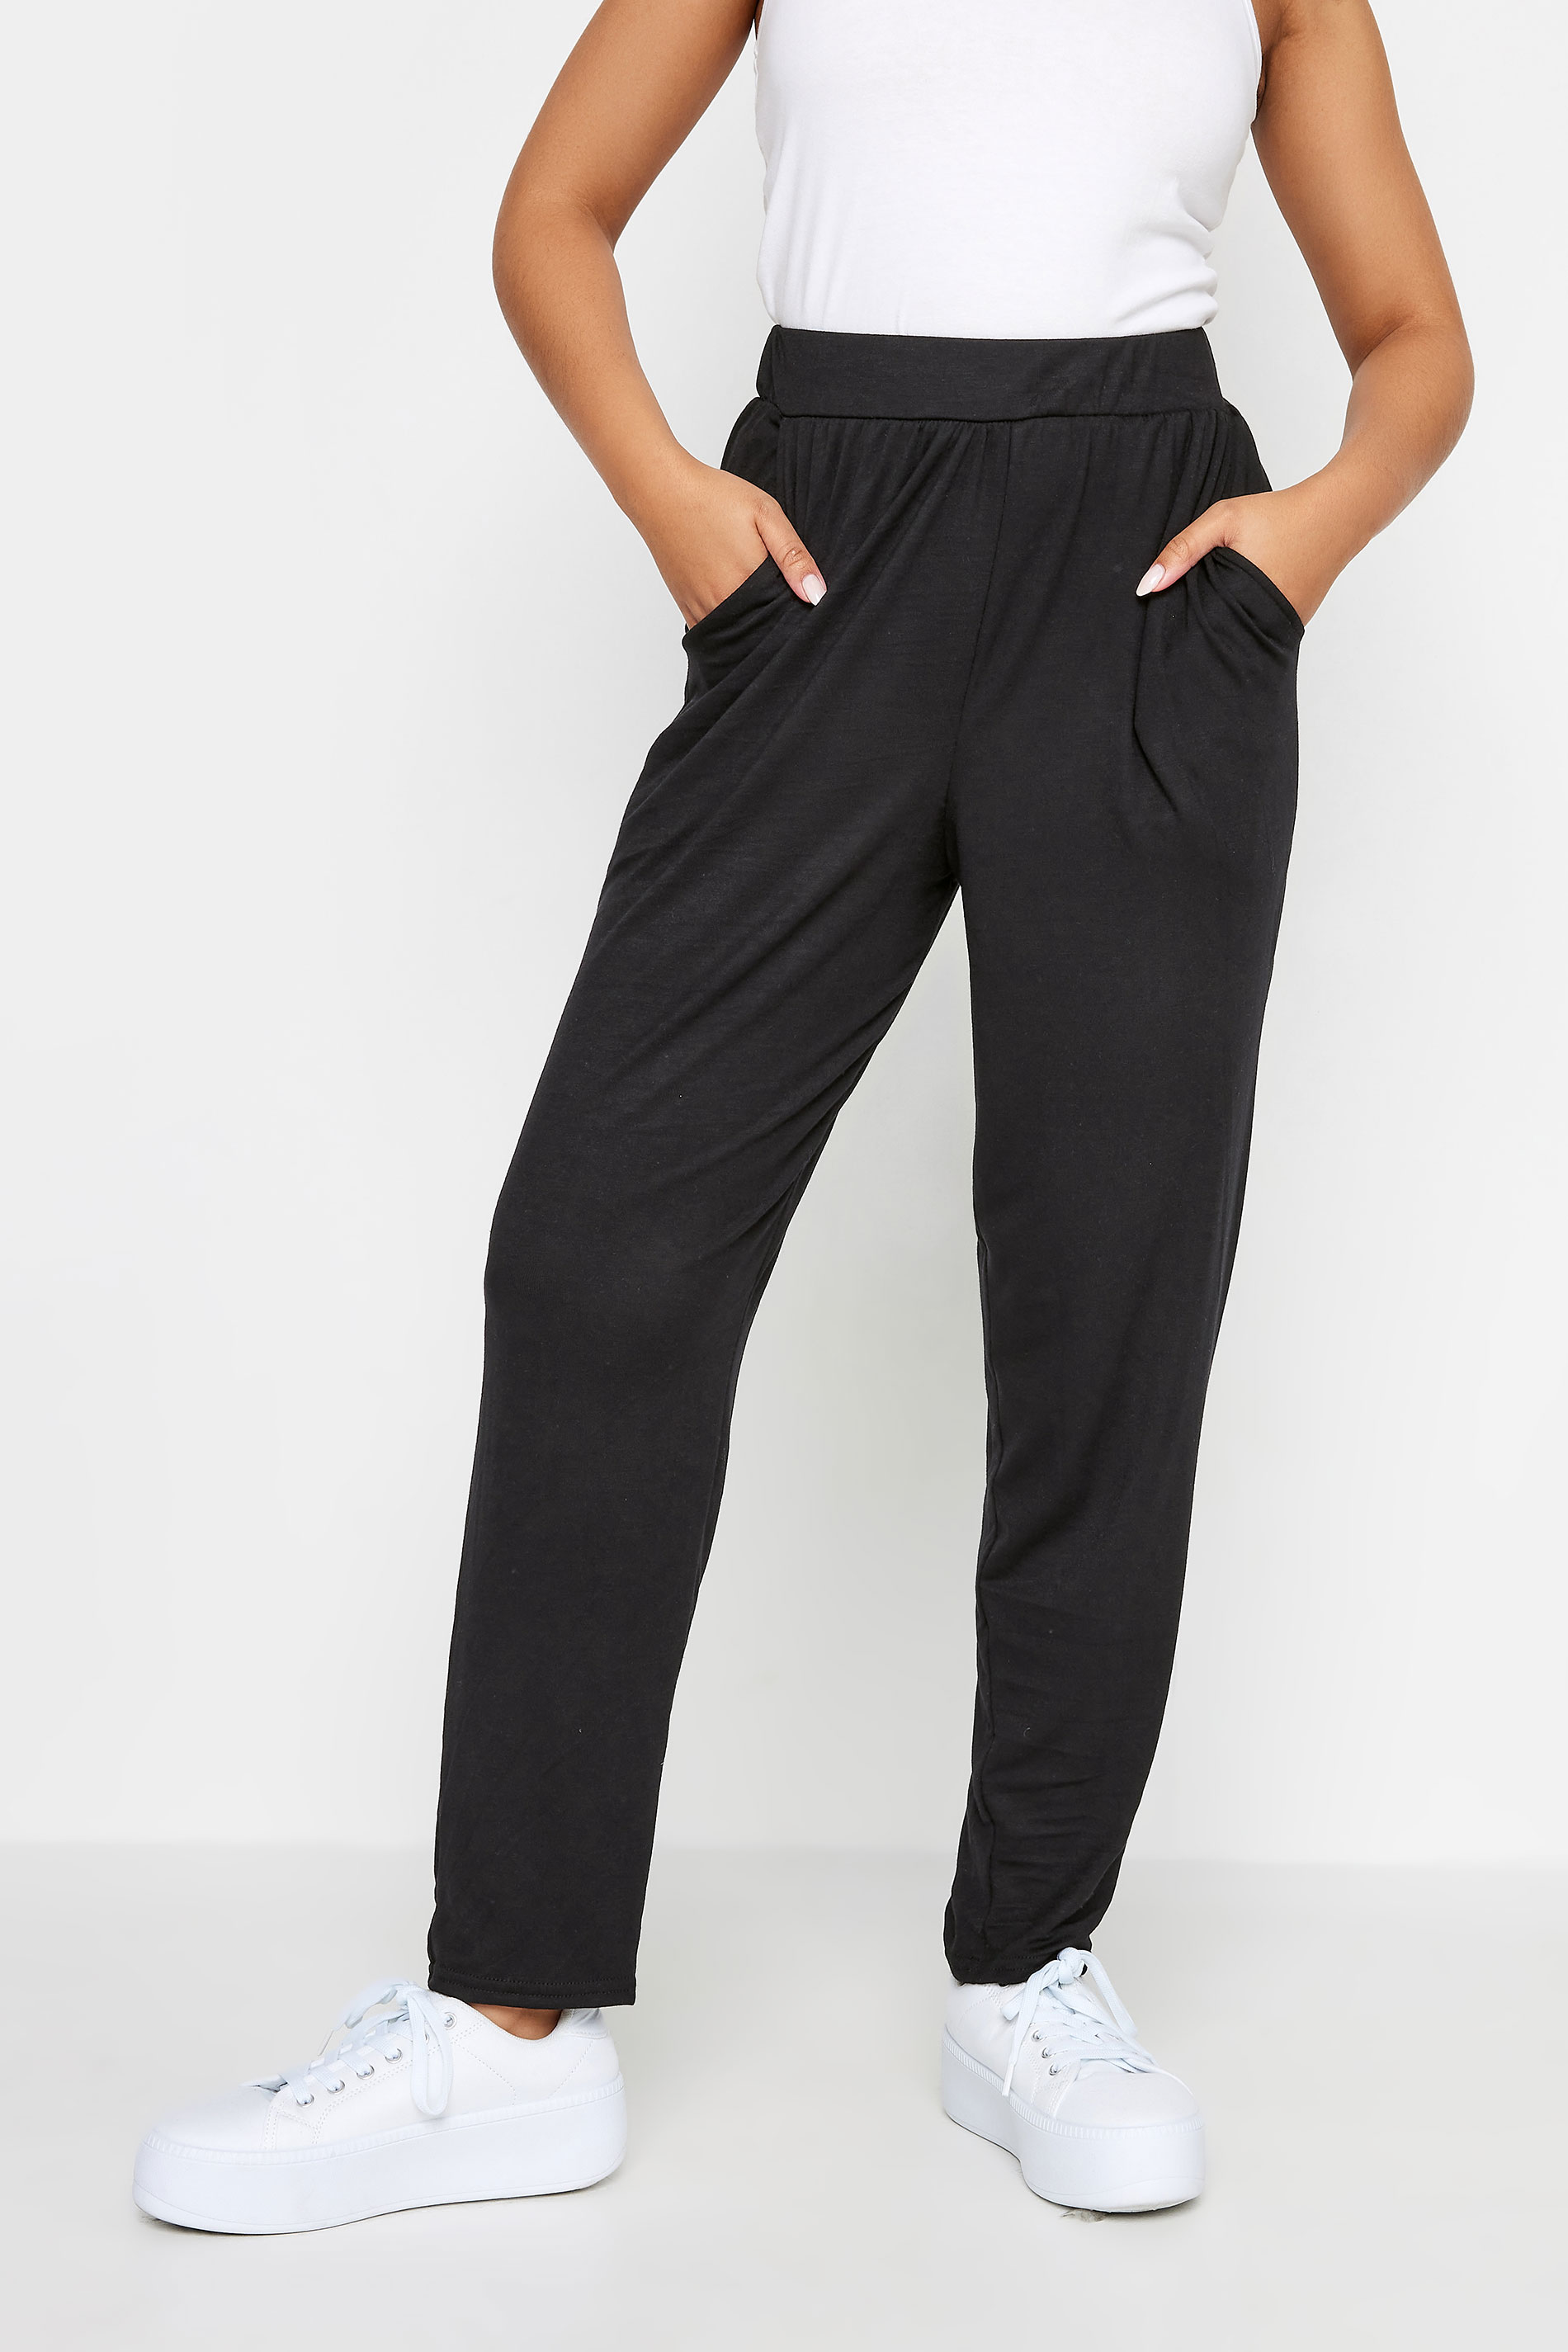 M&Co Petite Black Hareem Jersey Trousers | M&Co 1